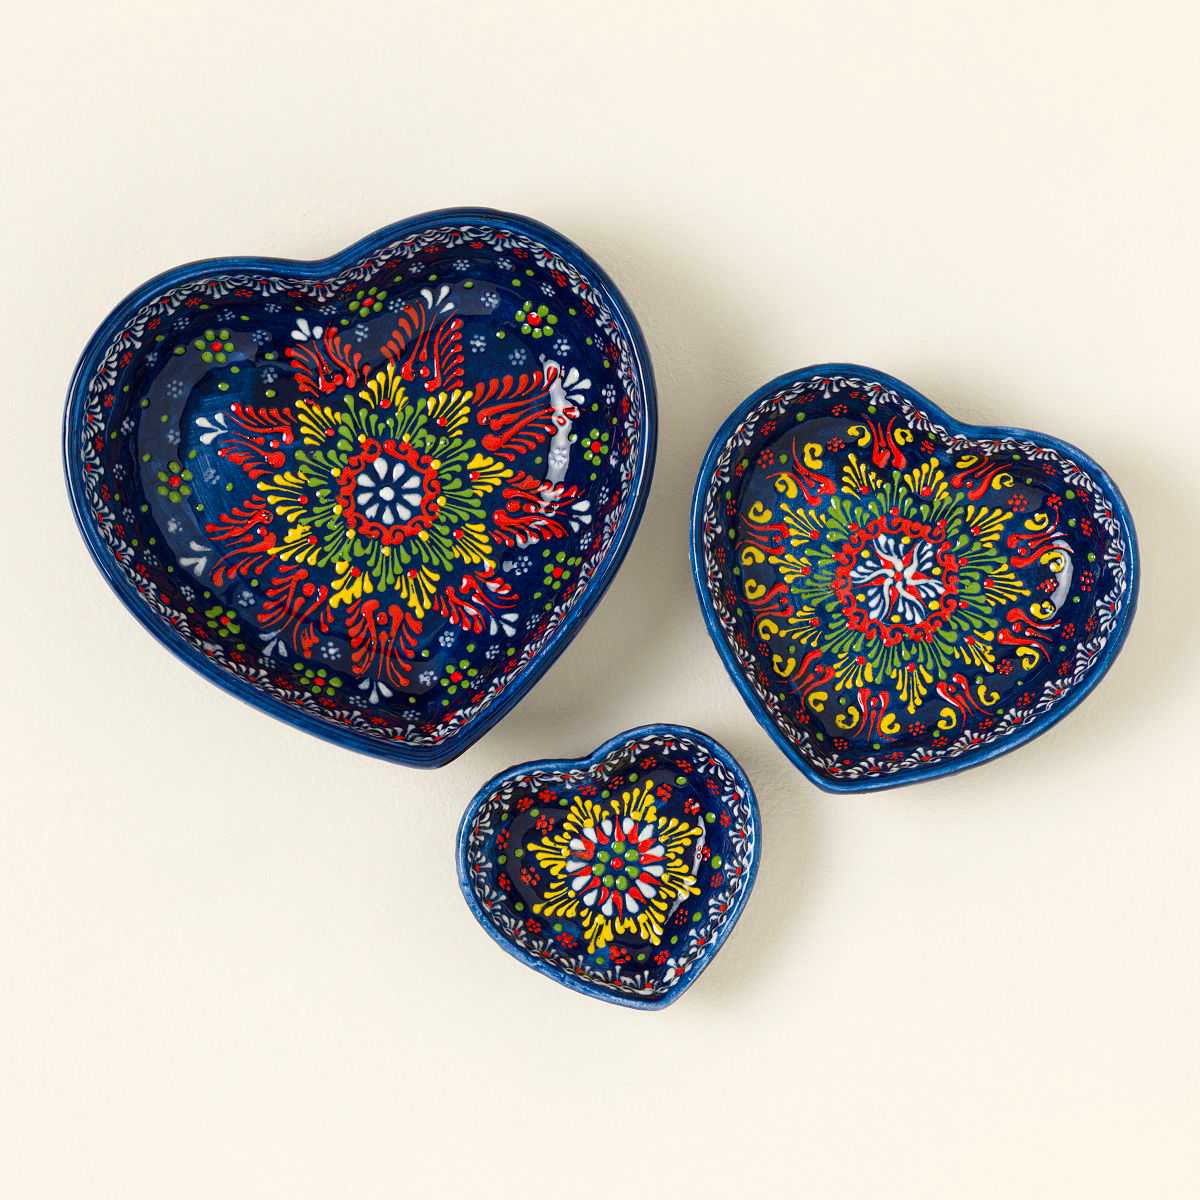 Turkish Lace Nesting Heart Bowls - Set of 3 - Navy